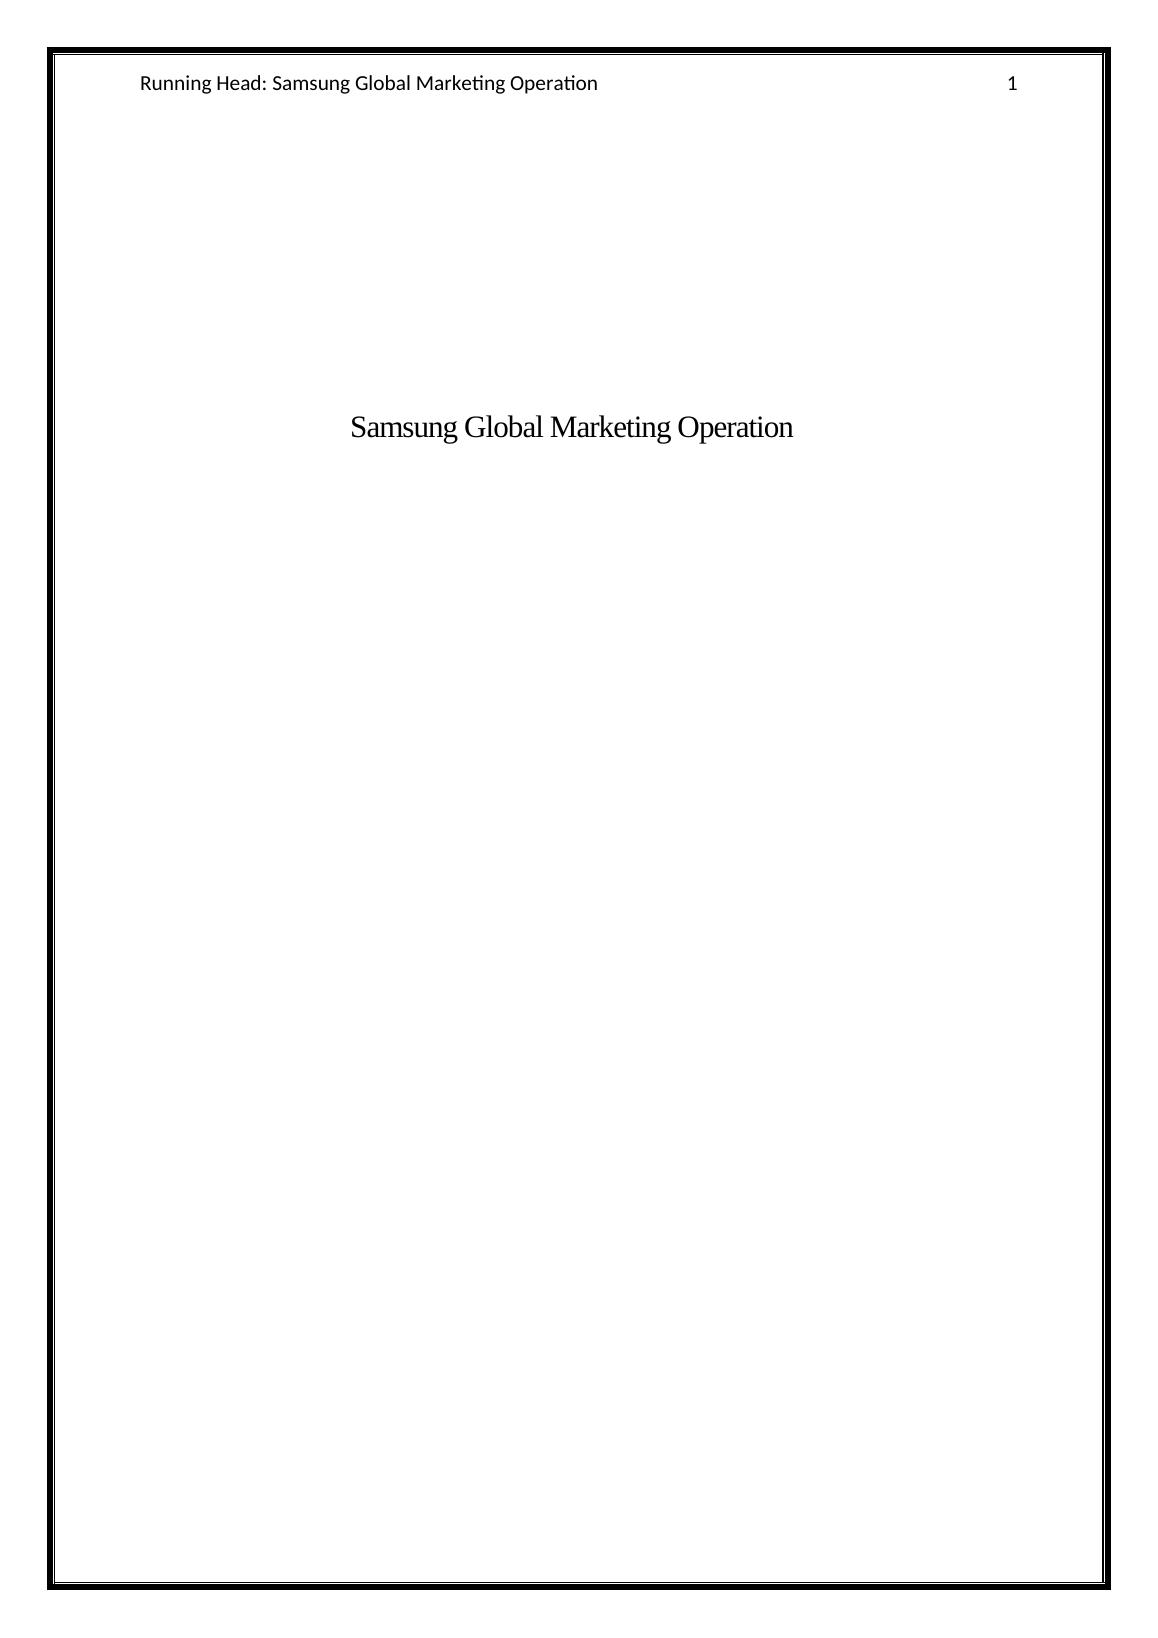 Samsung Global Marketing Operation_1